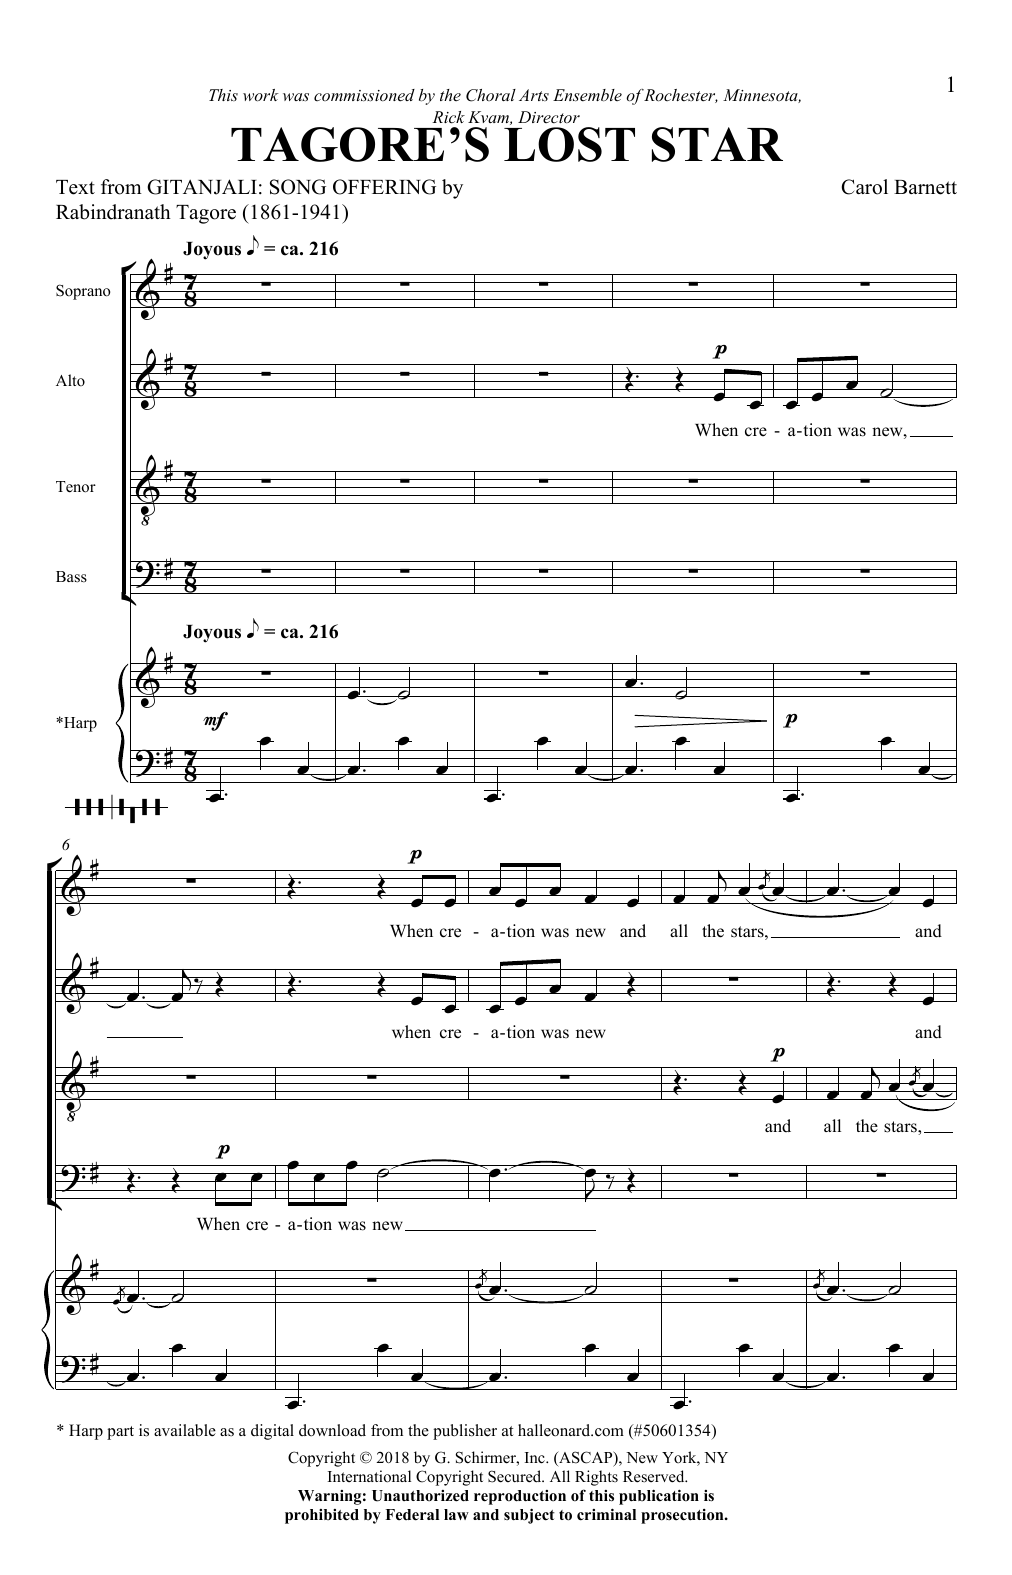 Carol Barnett Tagore's Lost Star sheet music notes and chords arranged for SATB Choir